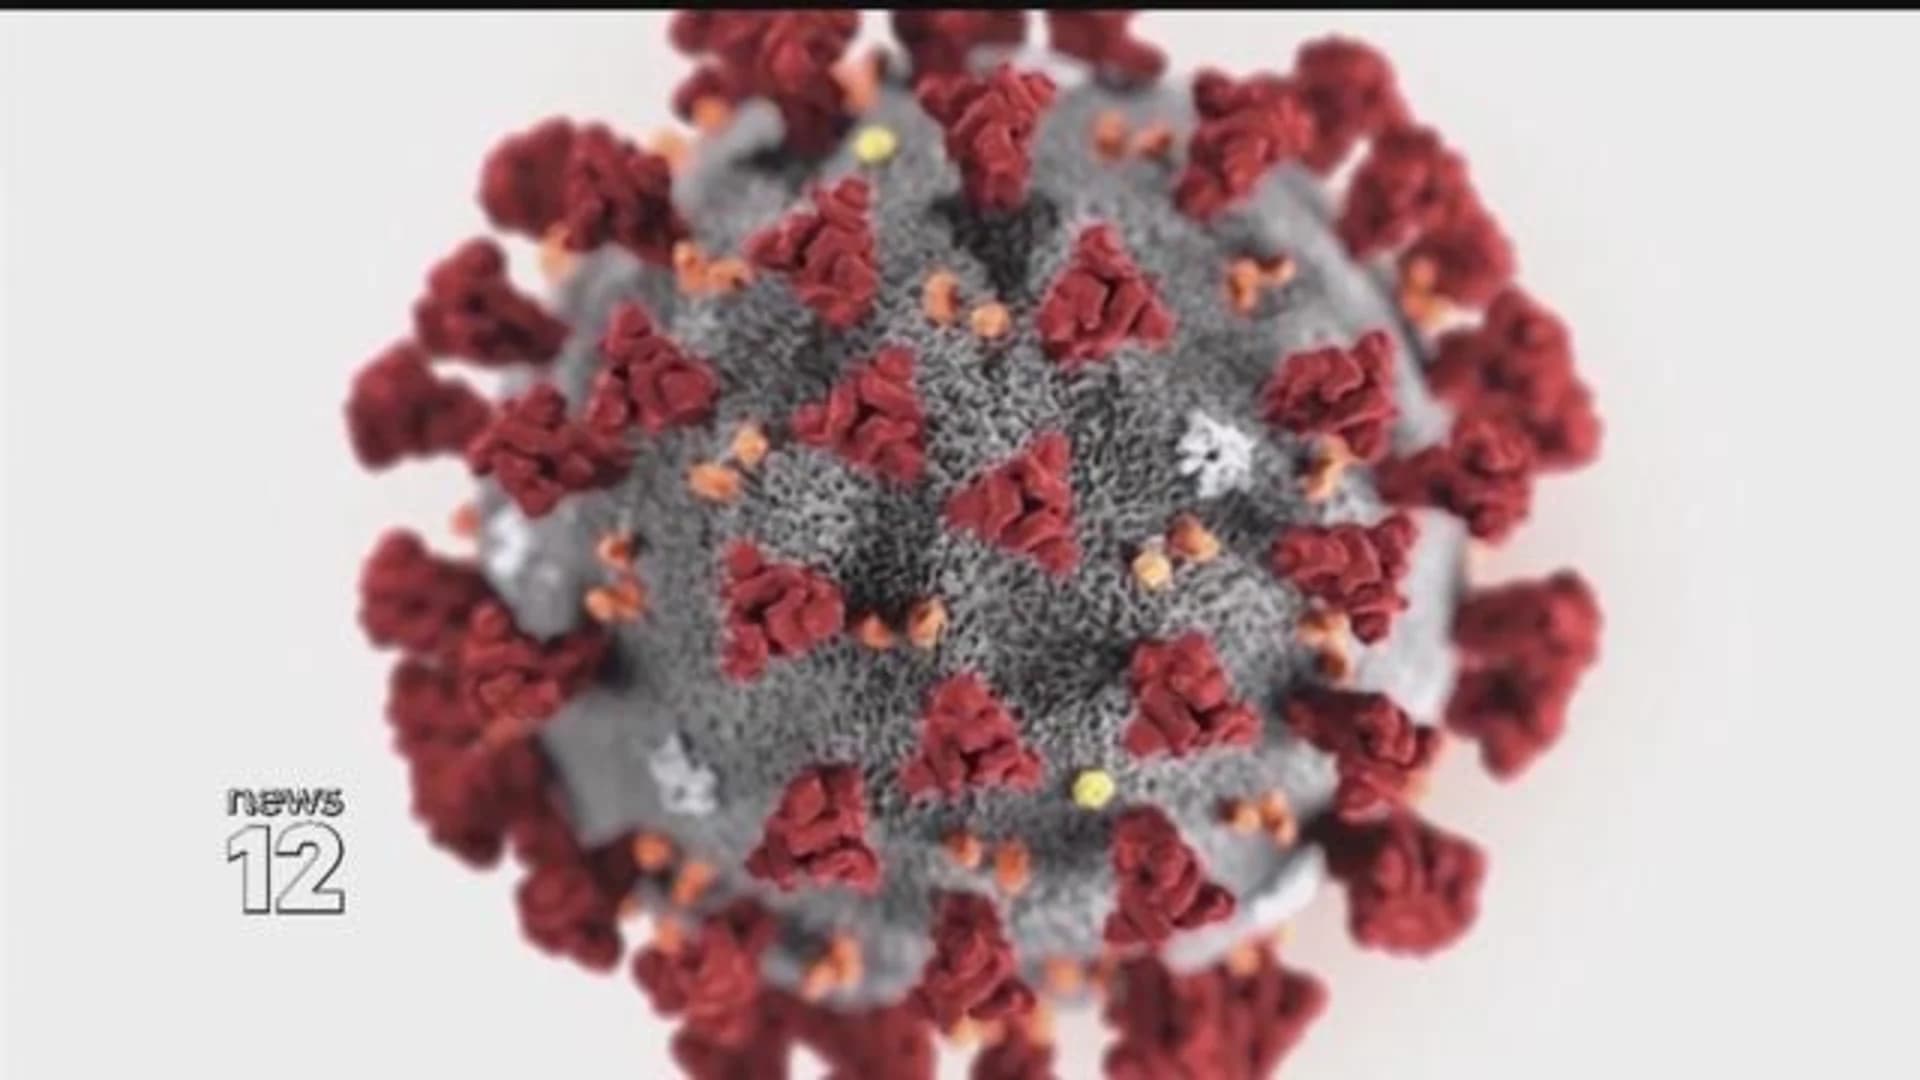 Coronavirus spreads in Pennsylvania, as cancellations grow